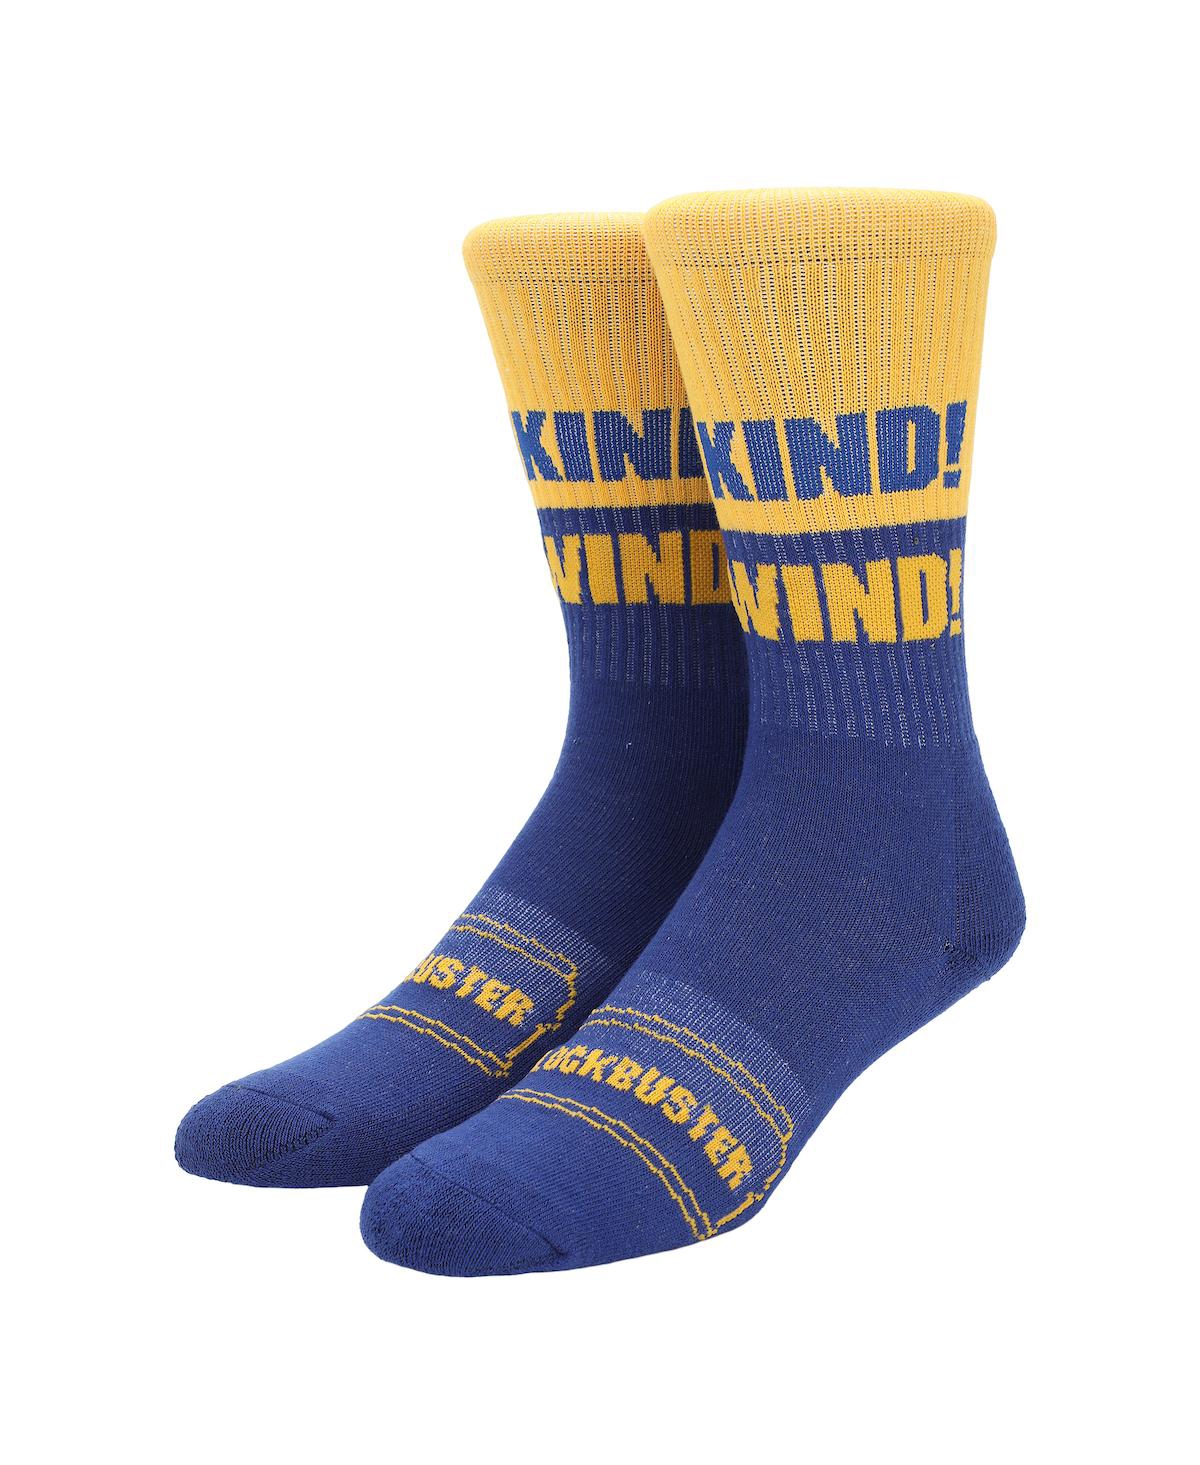 Men's Be Kind Rewind Adult Athletic Crew Socks - Blue